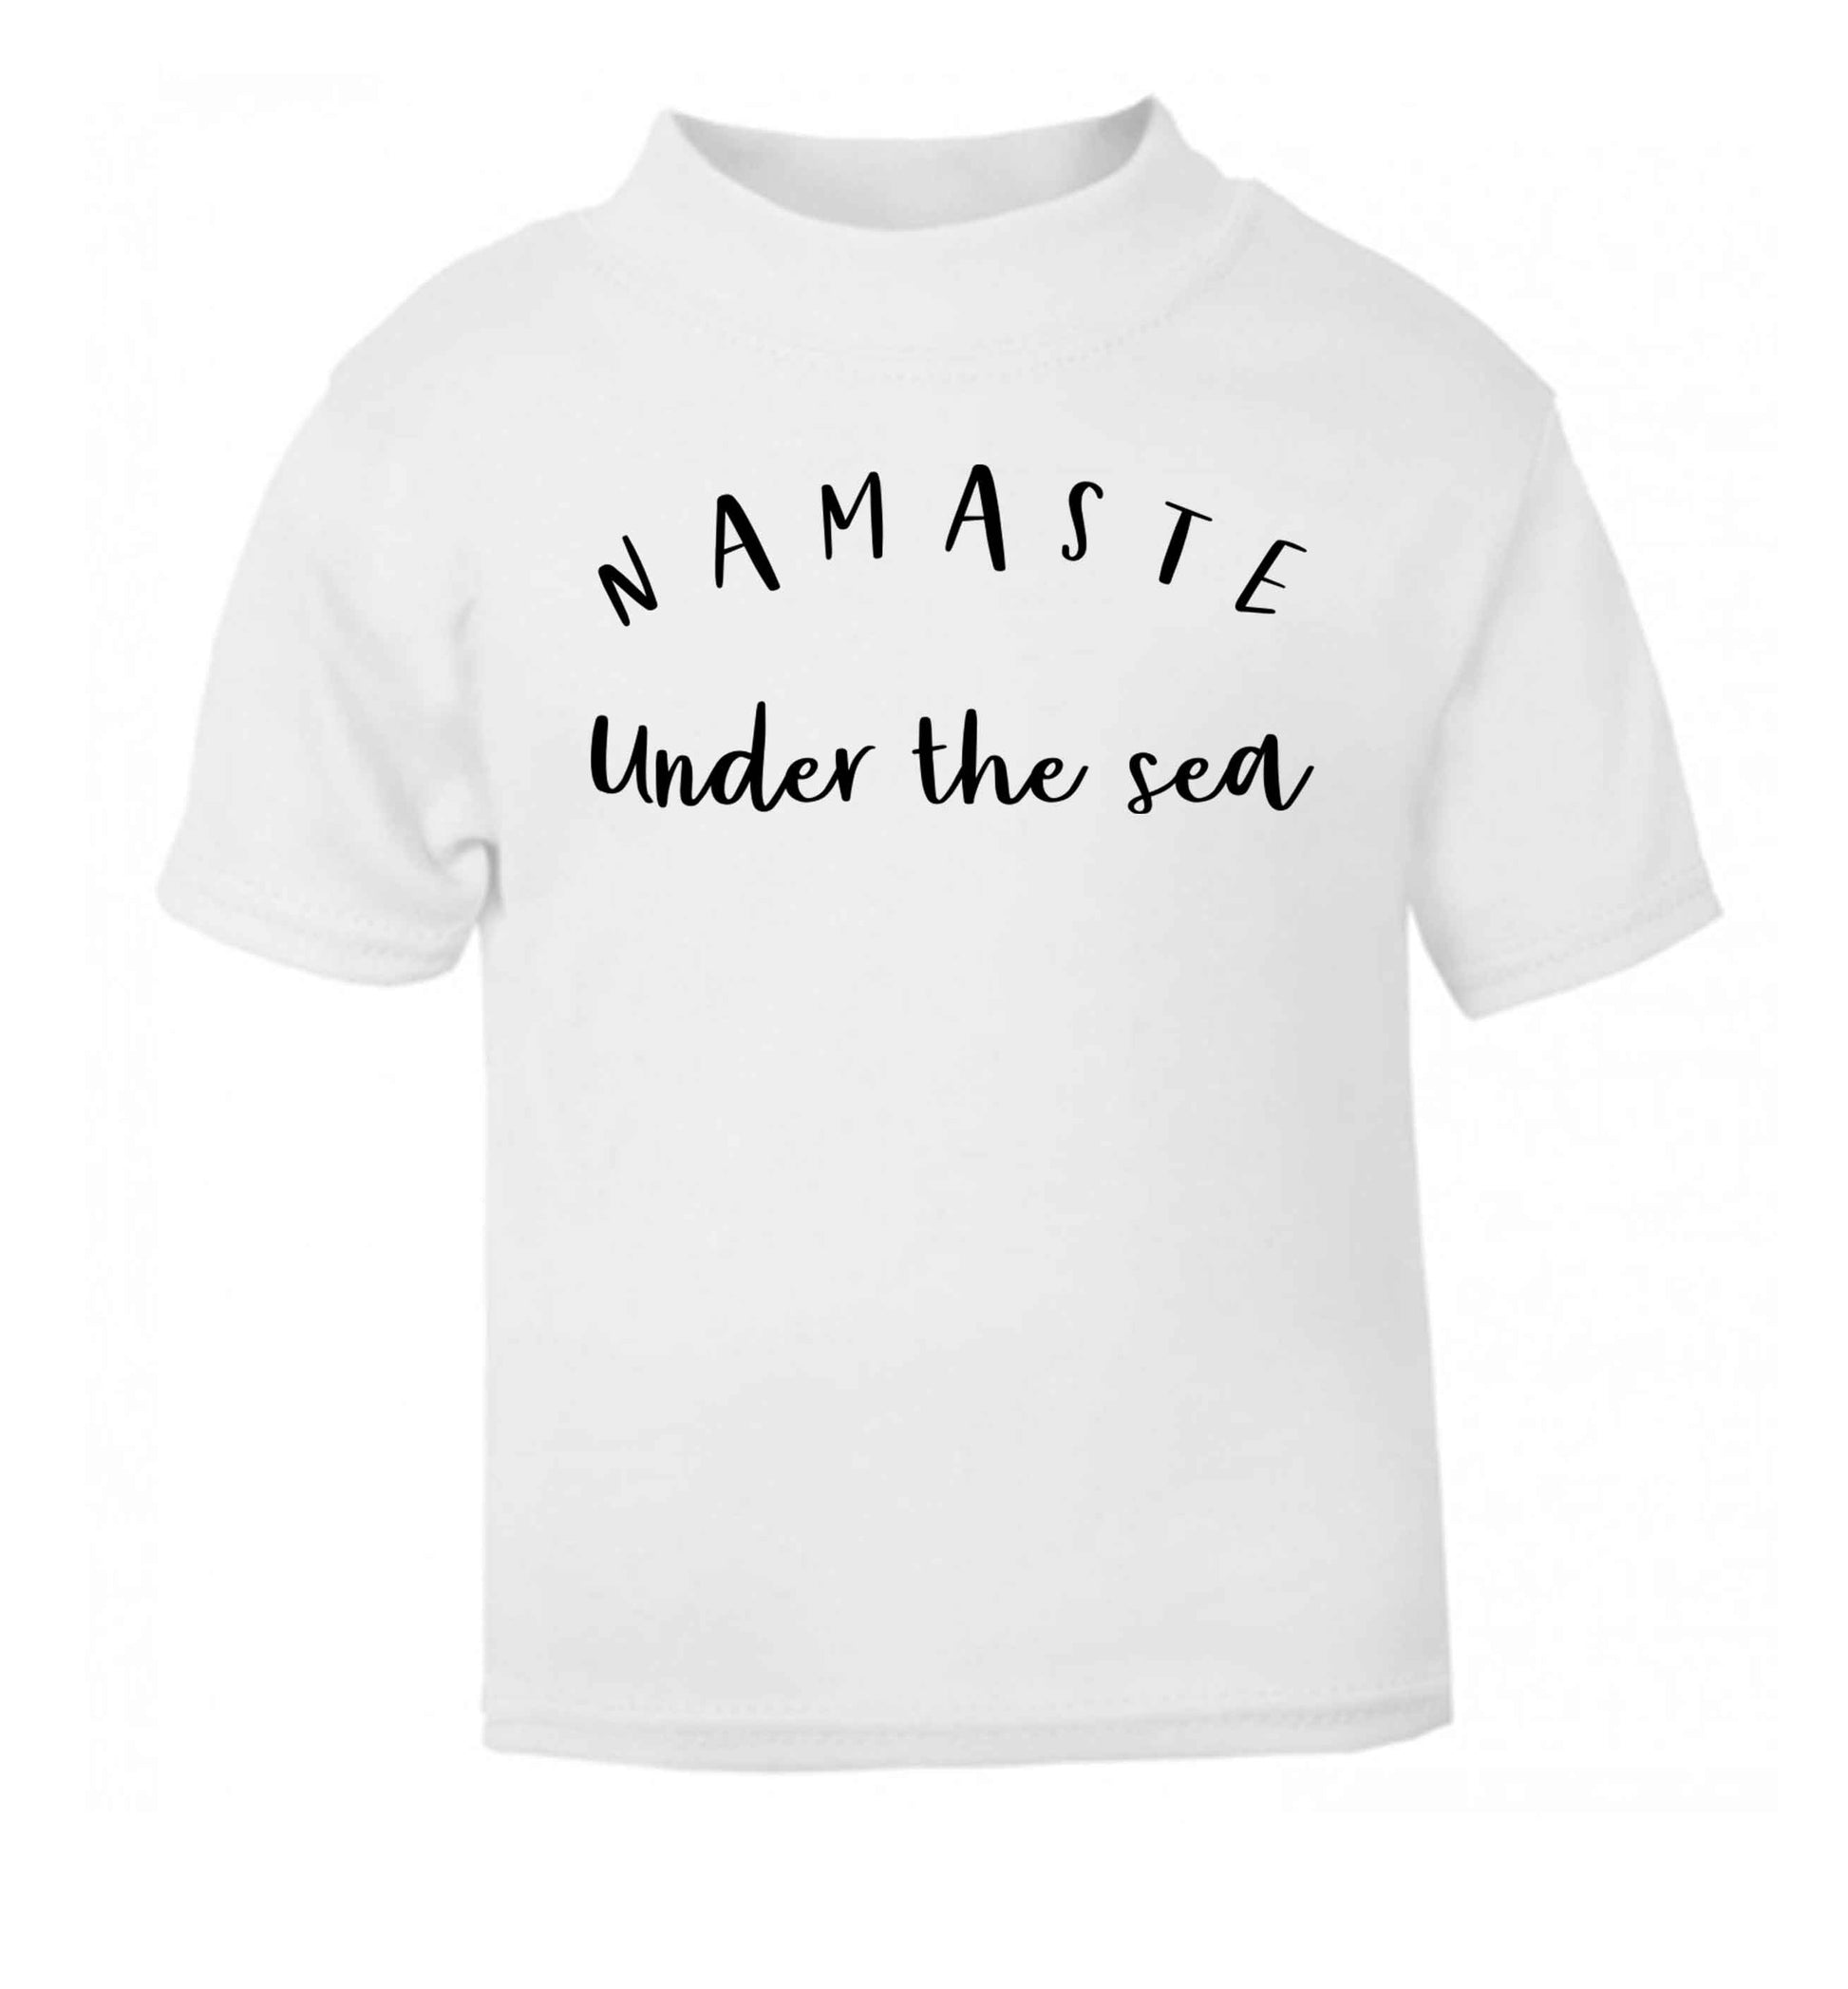 Namaste under the water white Baby Toddler Tshirt 2 Years